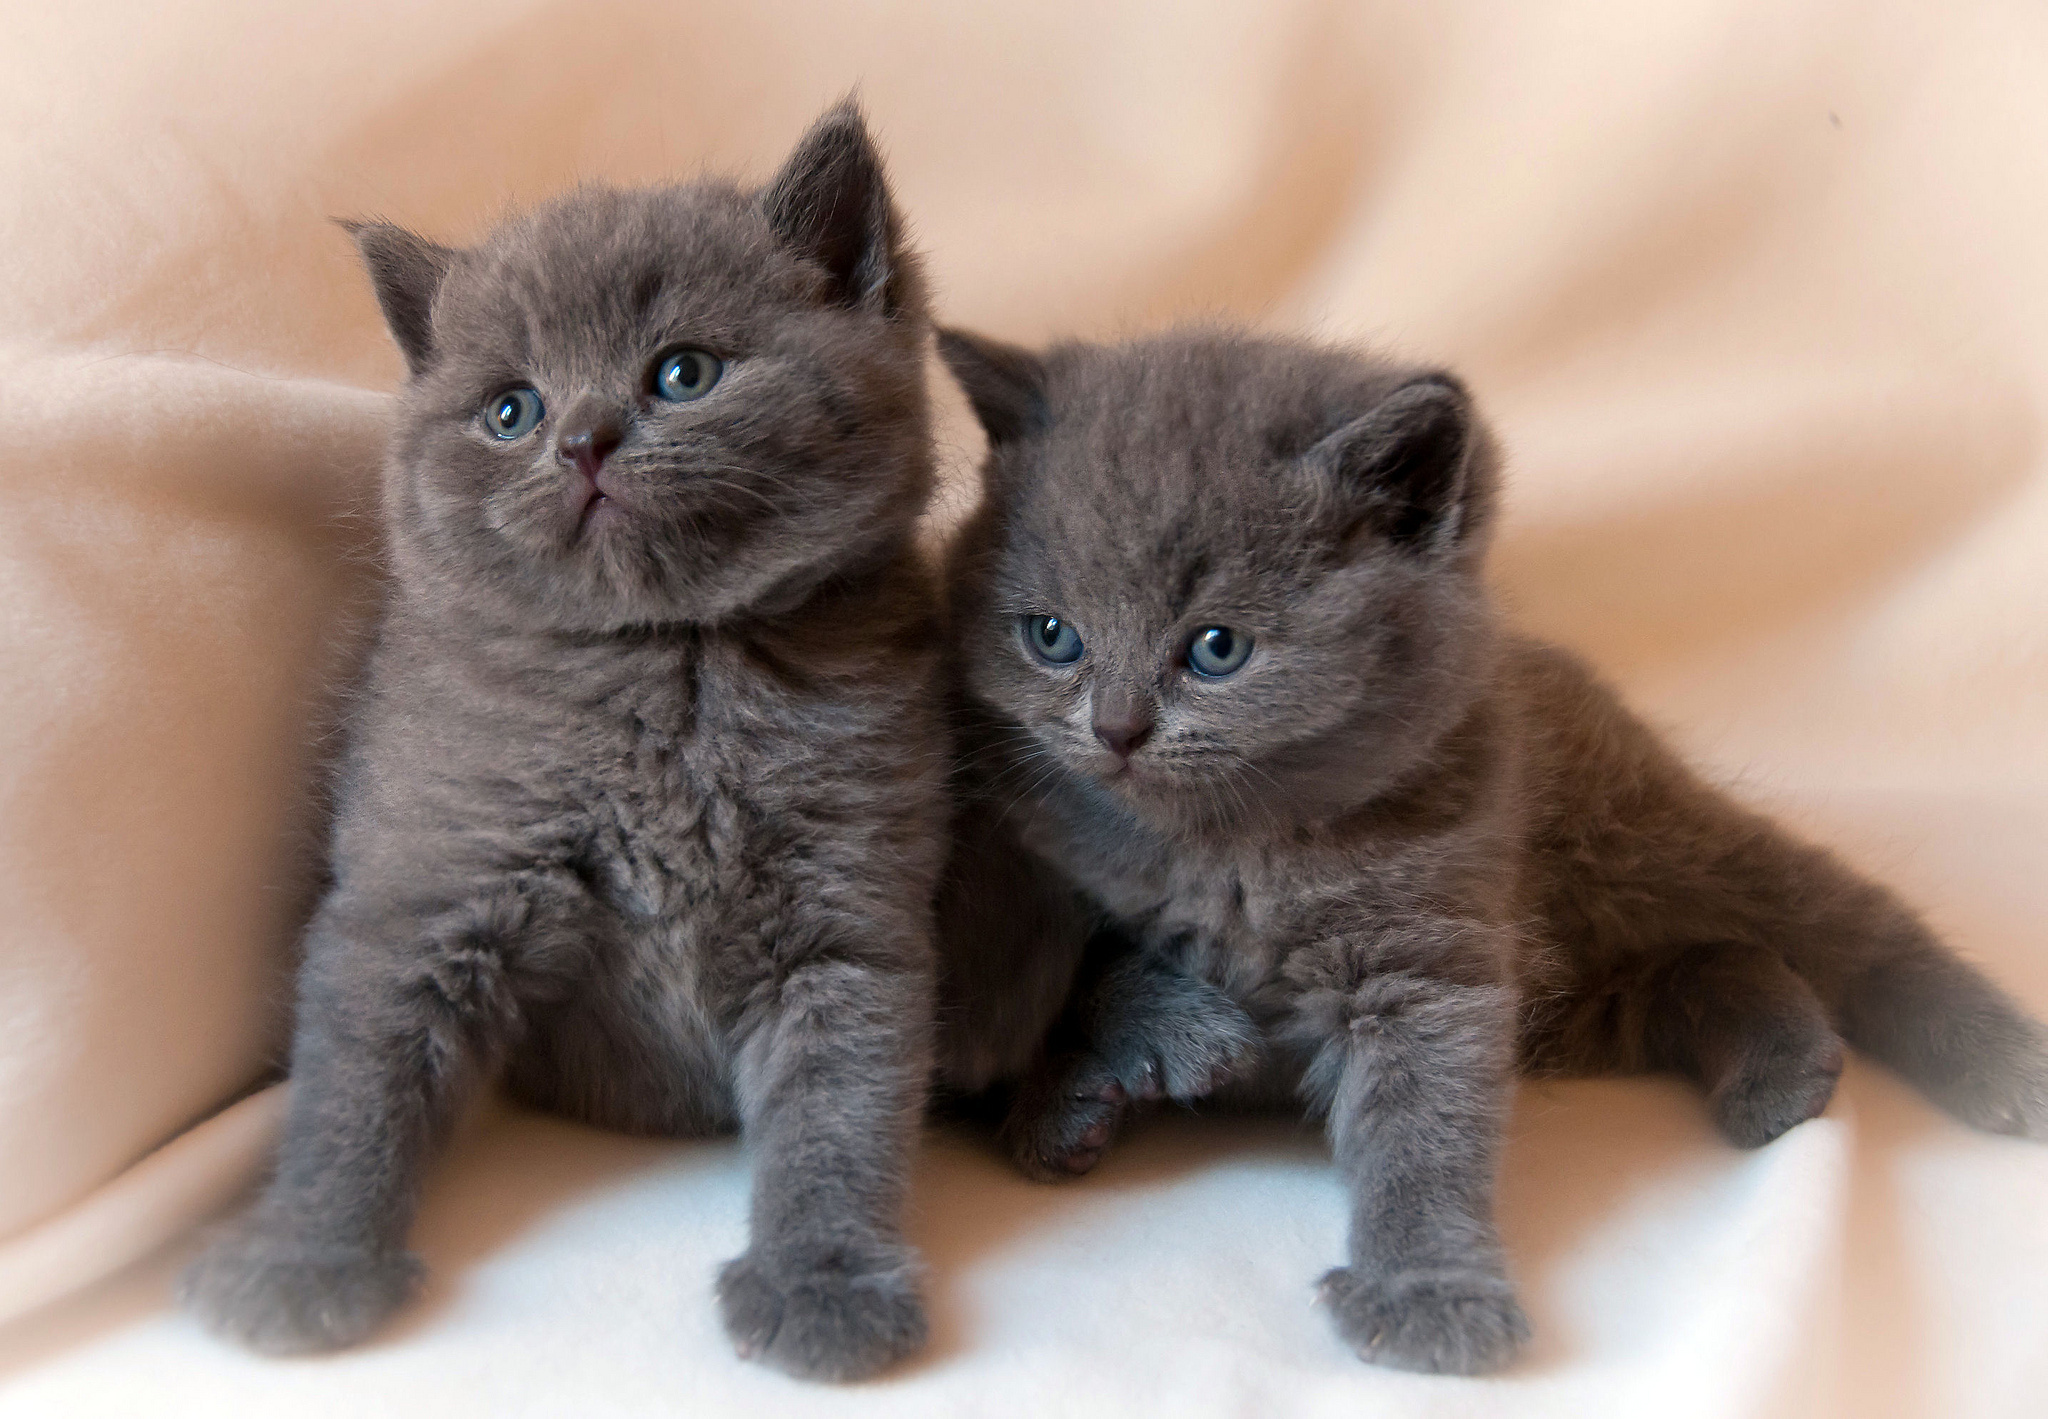 kittens-baby-kitten-cat-wallpapers-hd-desktop-and-mobile-backgrounds